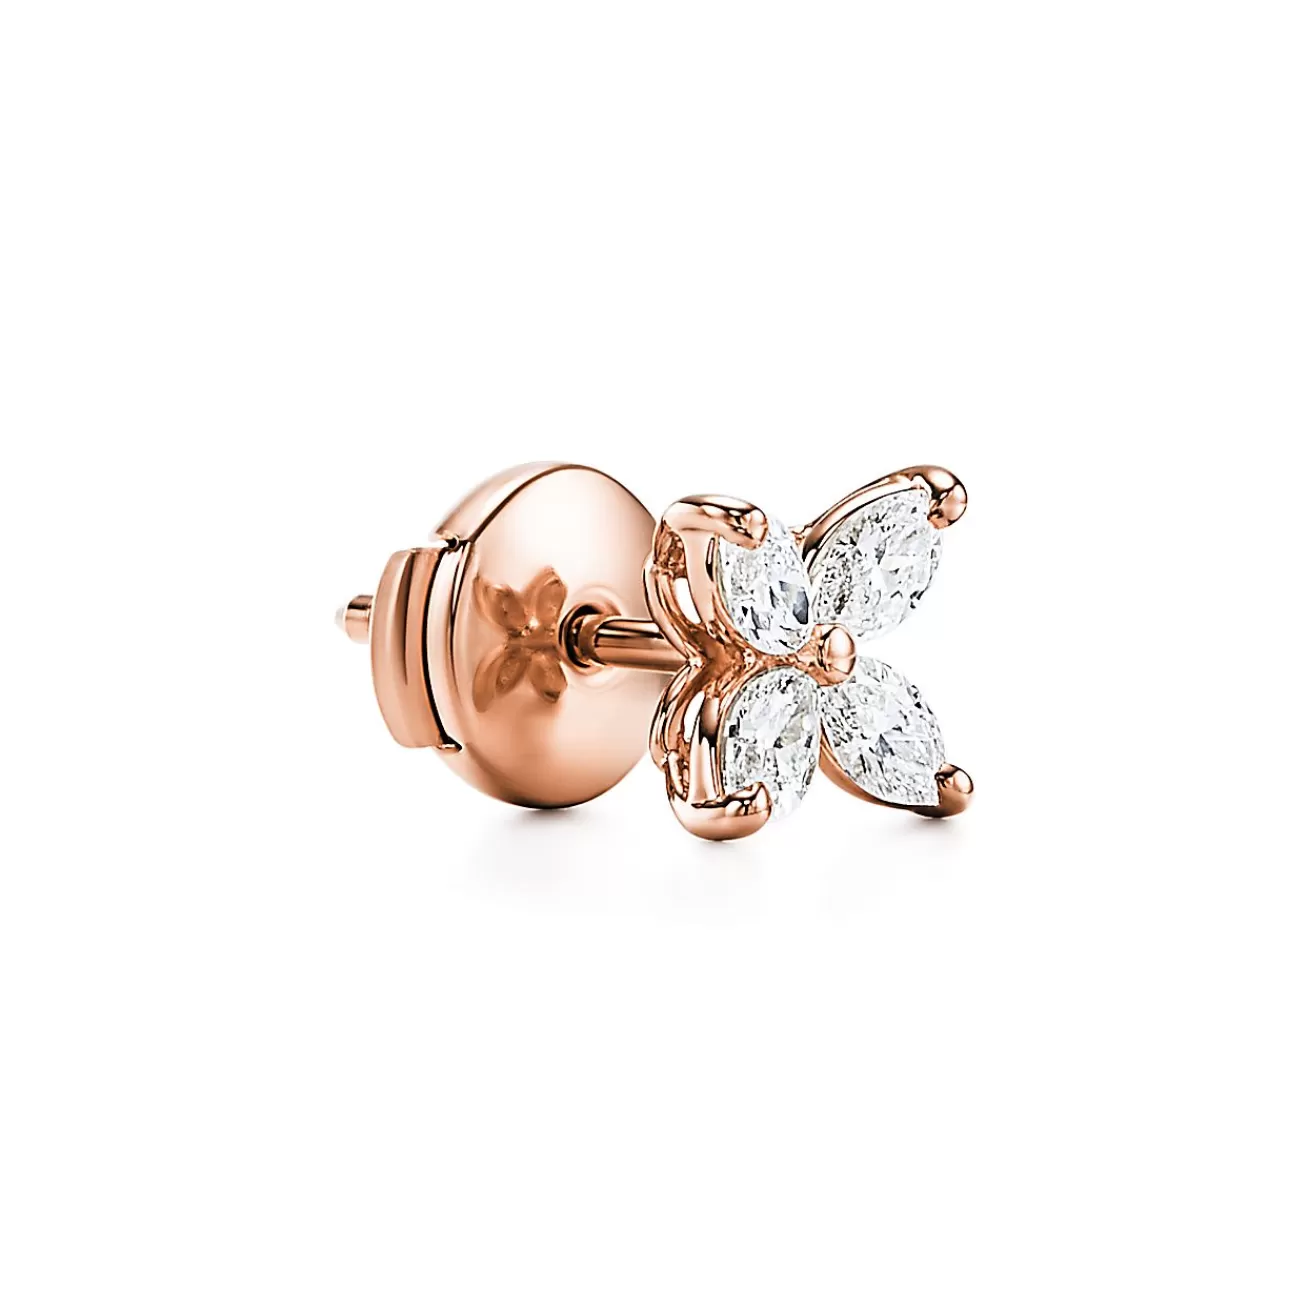 Tiffany & Co. Tiffany Victoria® earrings in 18k rose gold with diamonds, small. | ^ Earrings | Dainty Jewelry